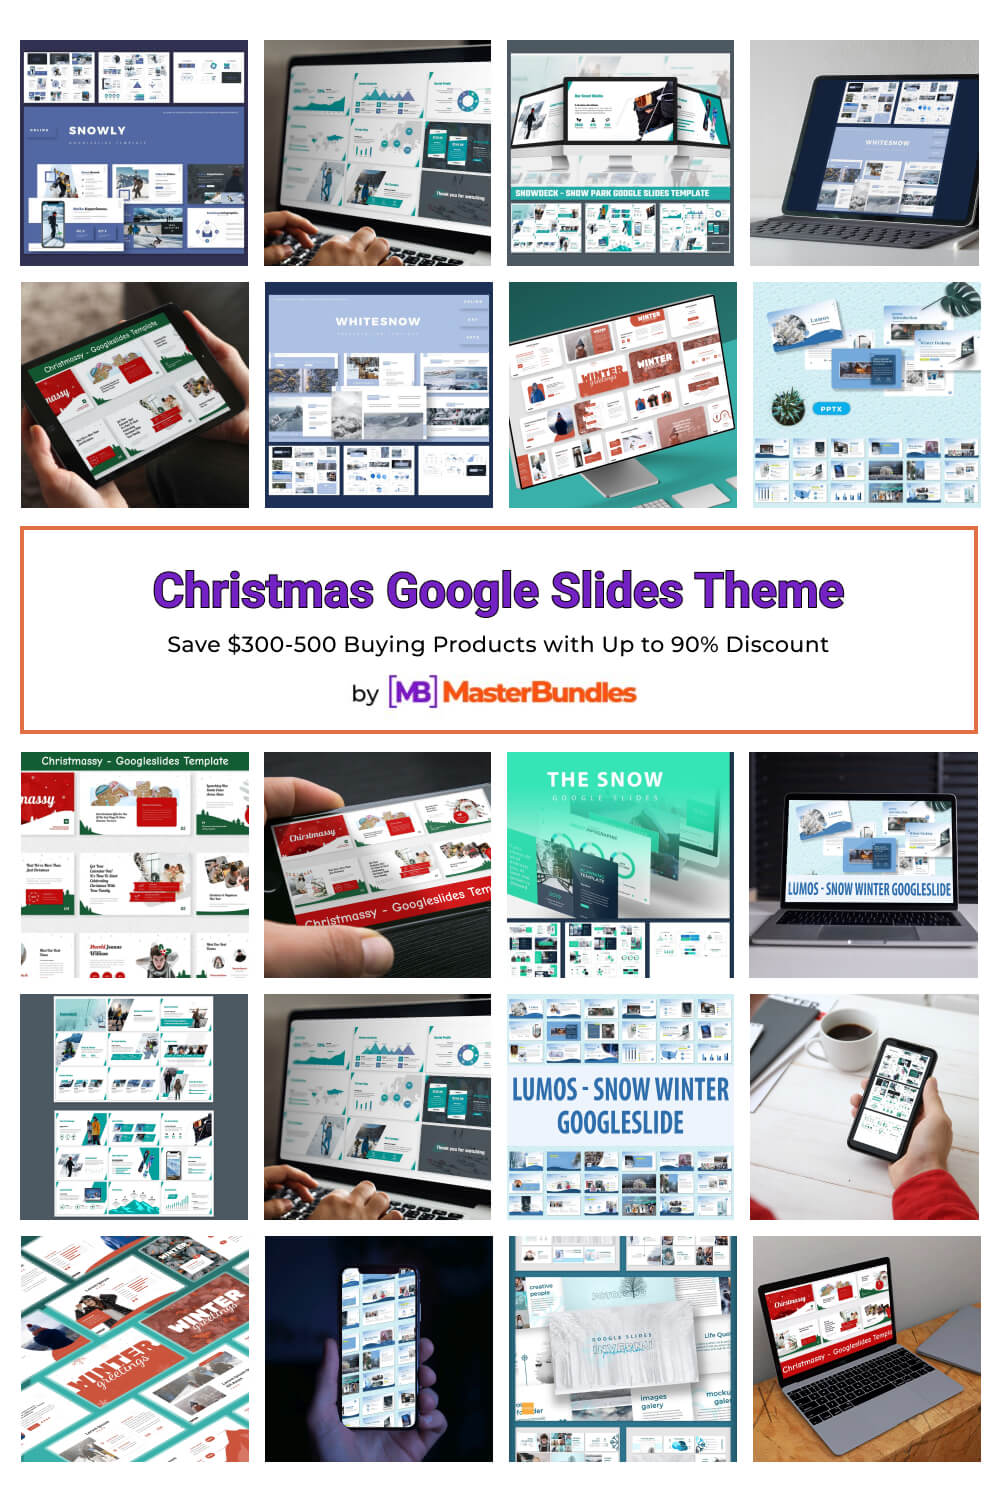 christmas google slides theme pinterest image.